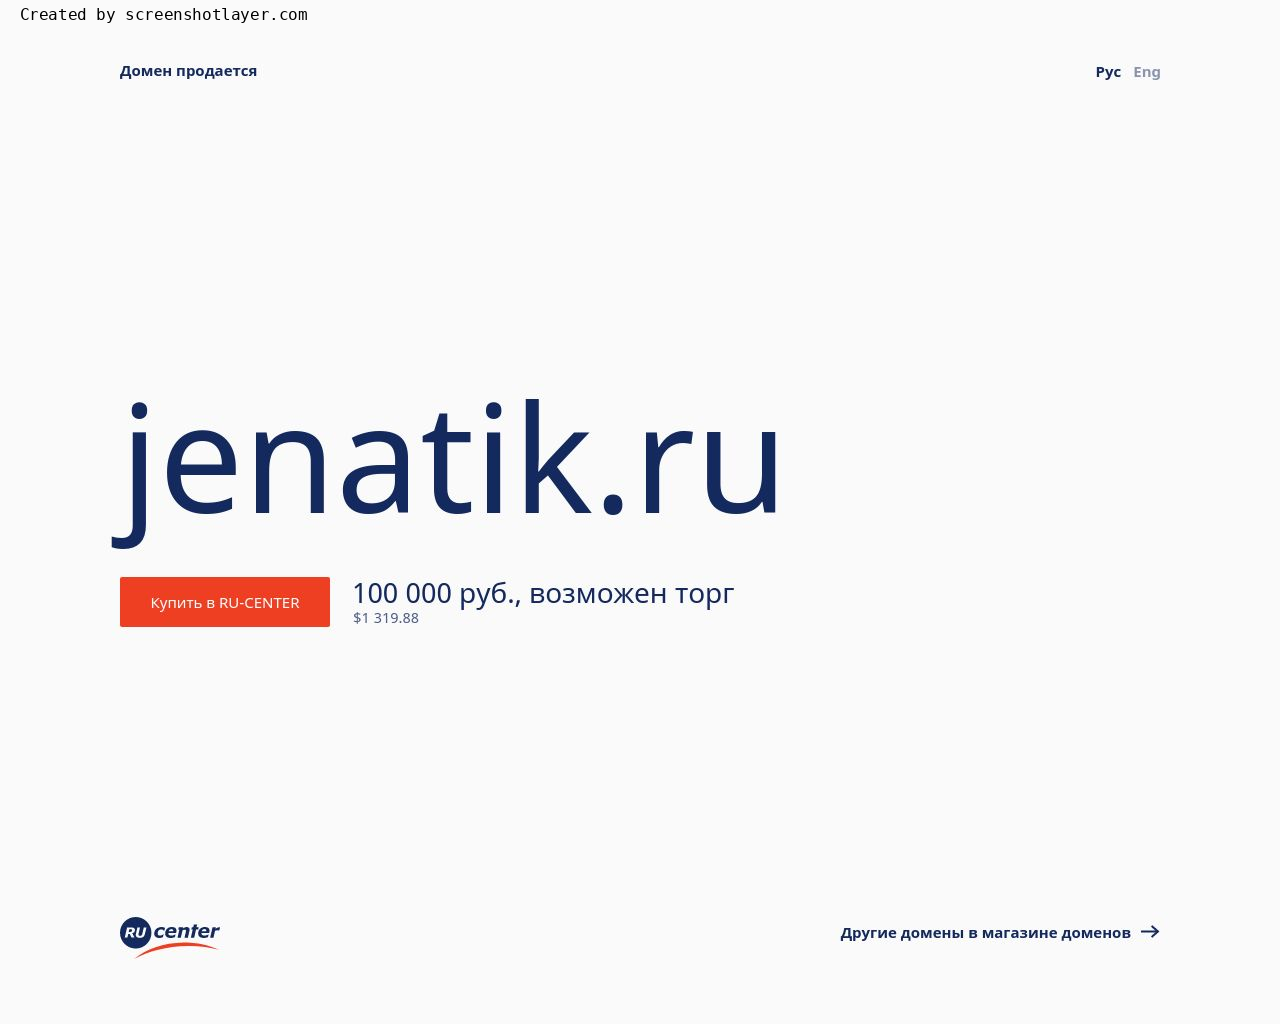 Изображение сайта jenatik.ru в разрешении 1280x1024